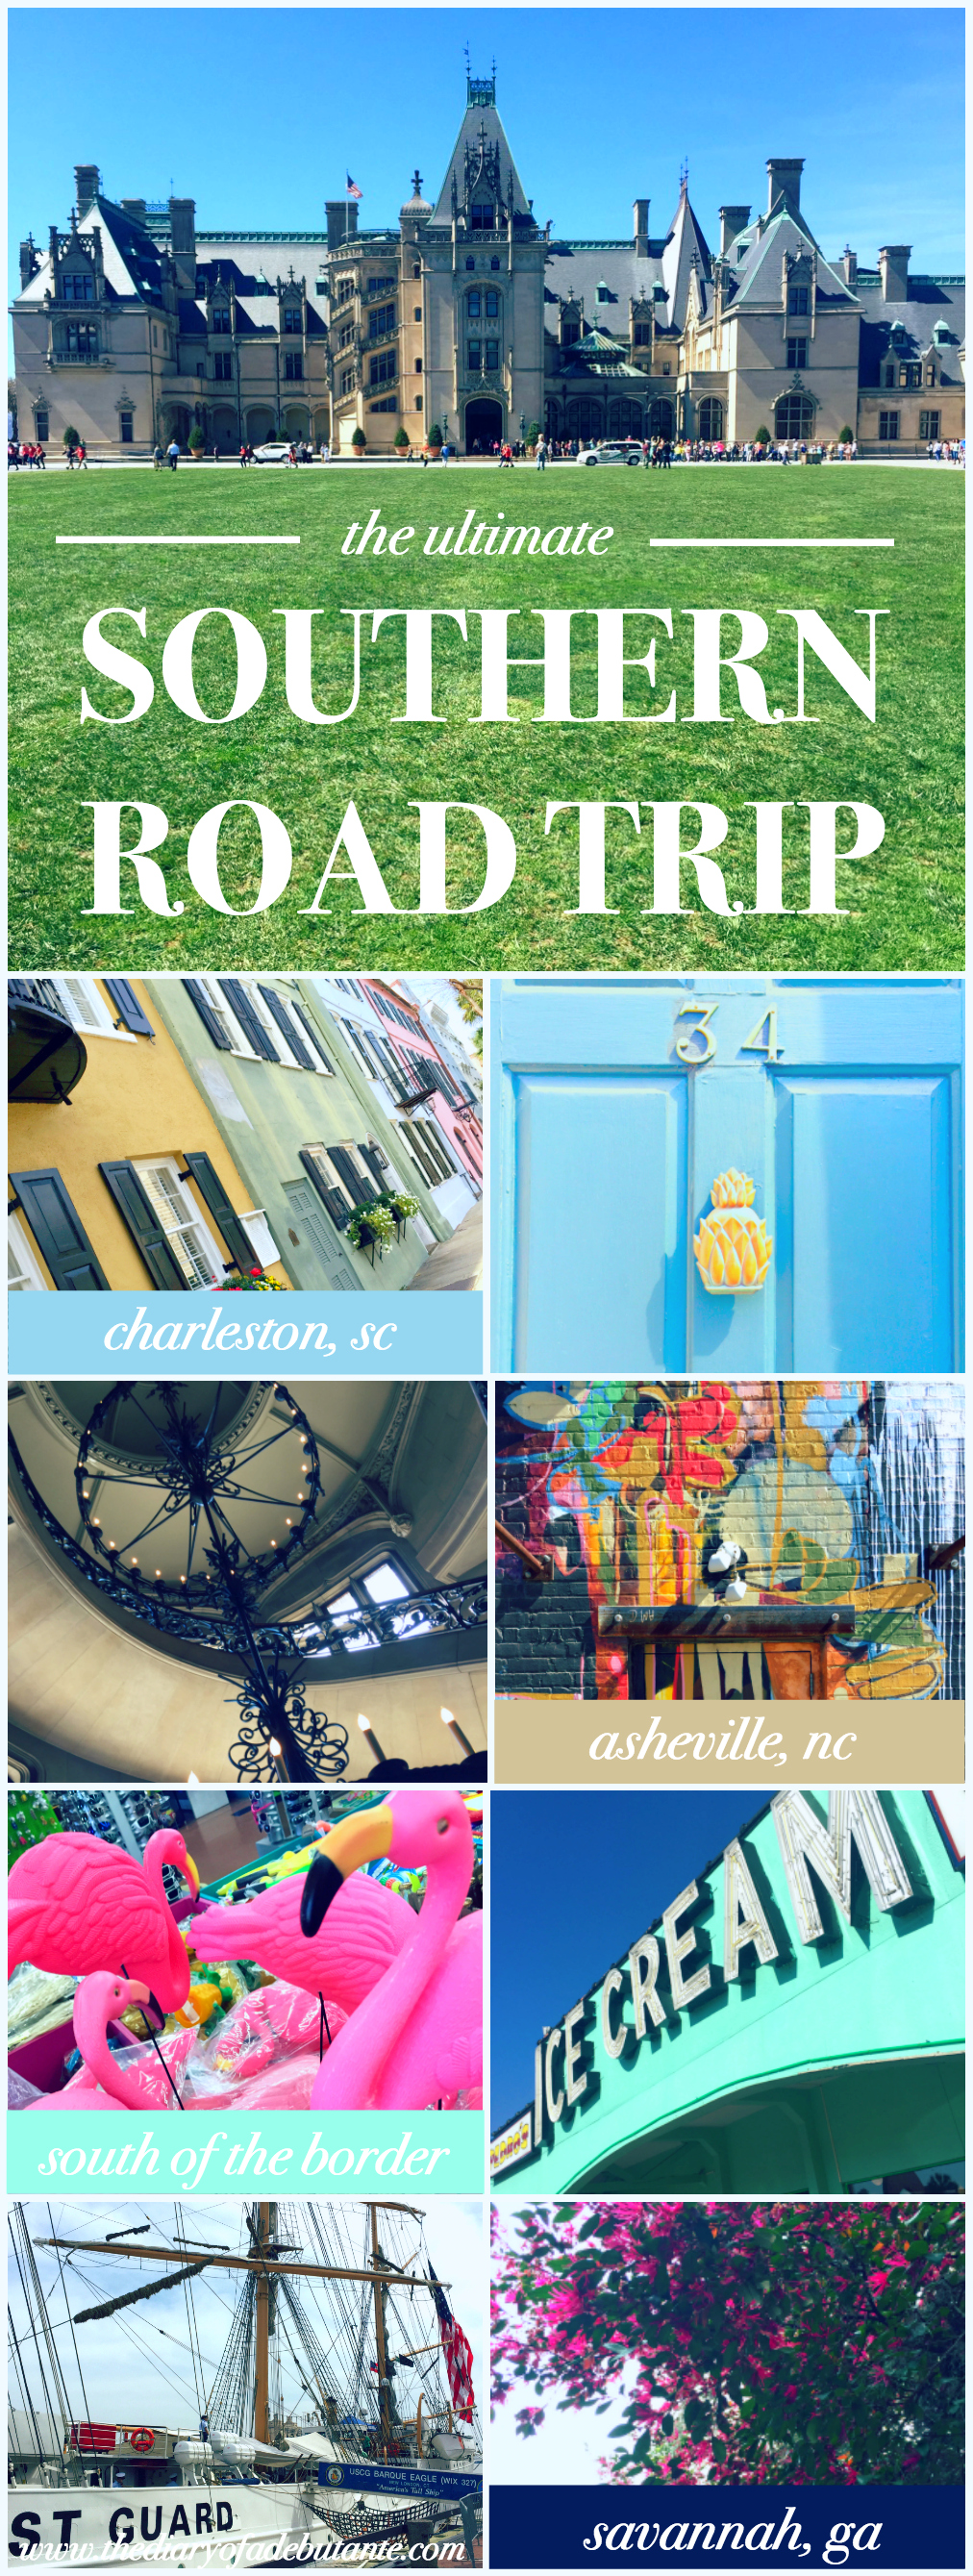 Ultimate Southern Road Trip, Southern Road Trip, American Road Trip, Hamer, South Carolina, Stephanie Ziajka, Diary of a Debutante